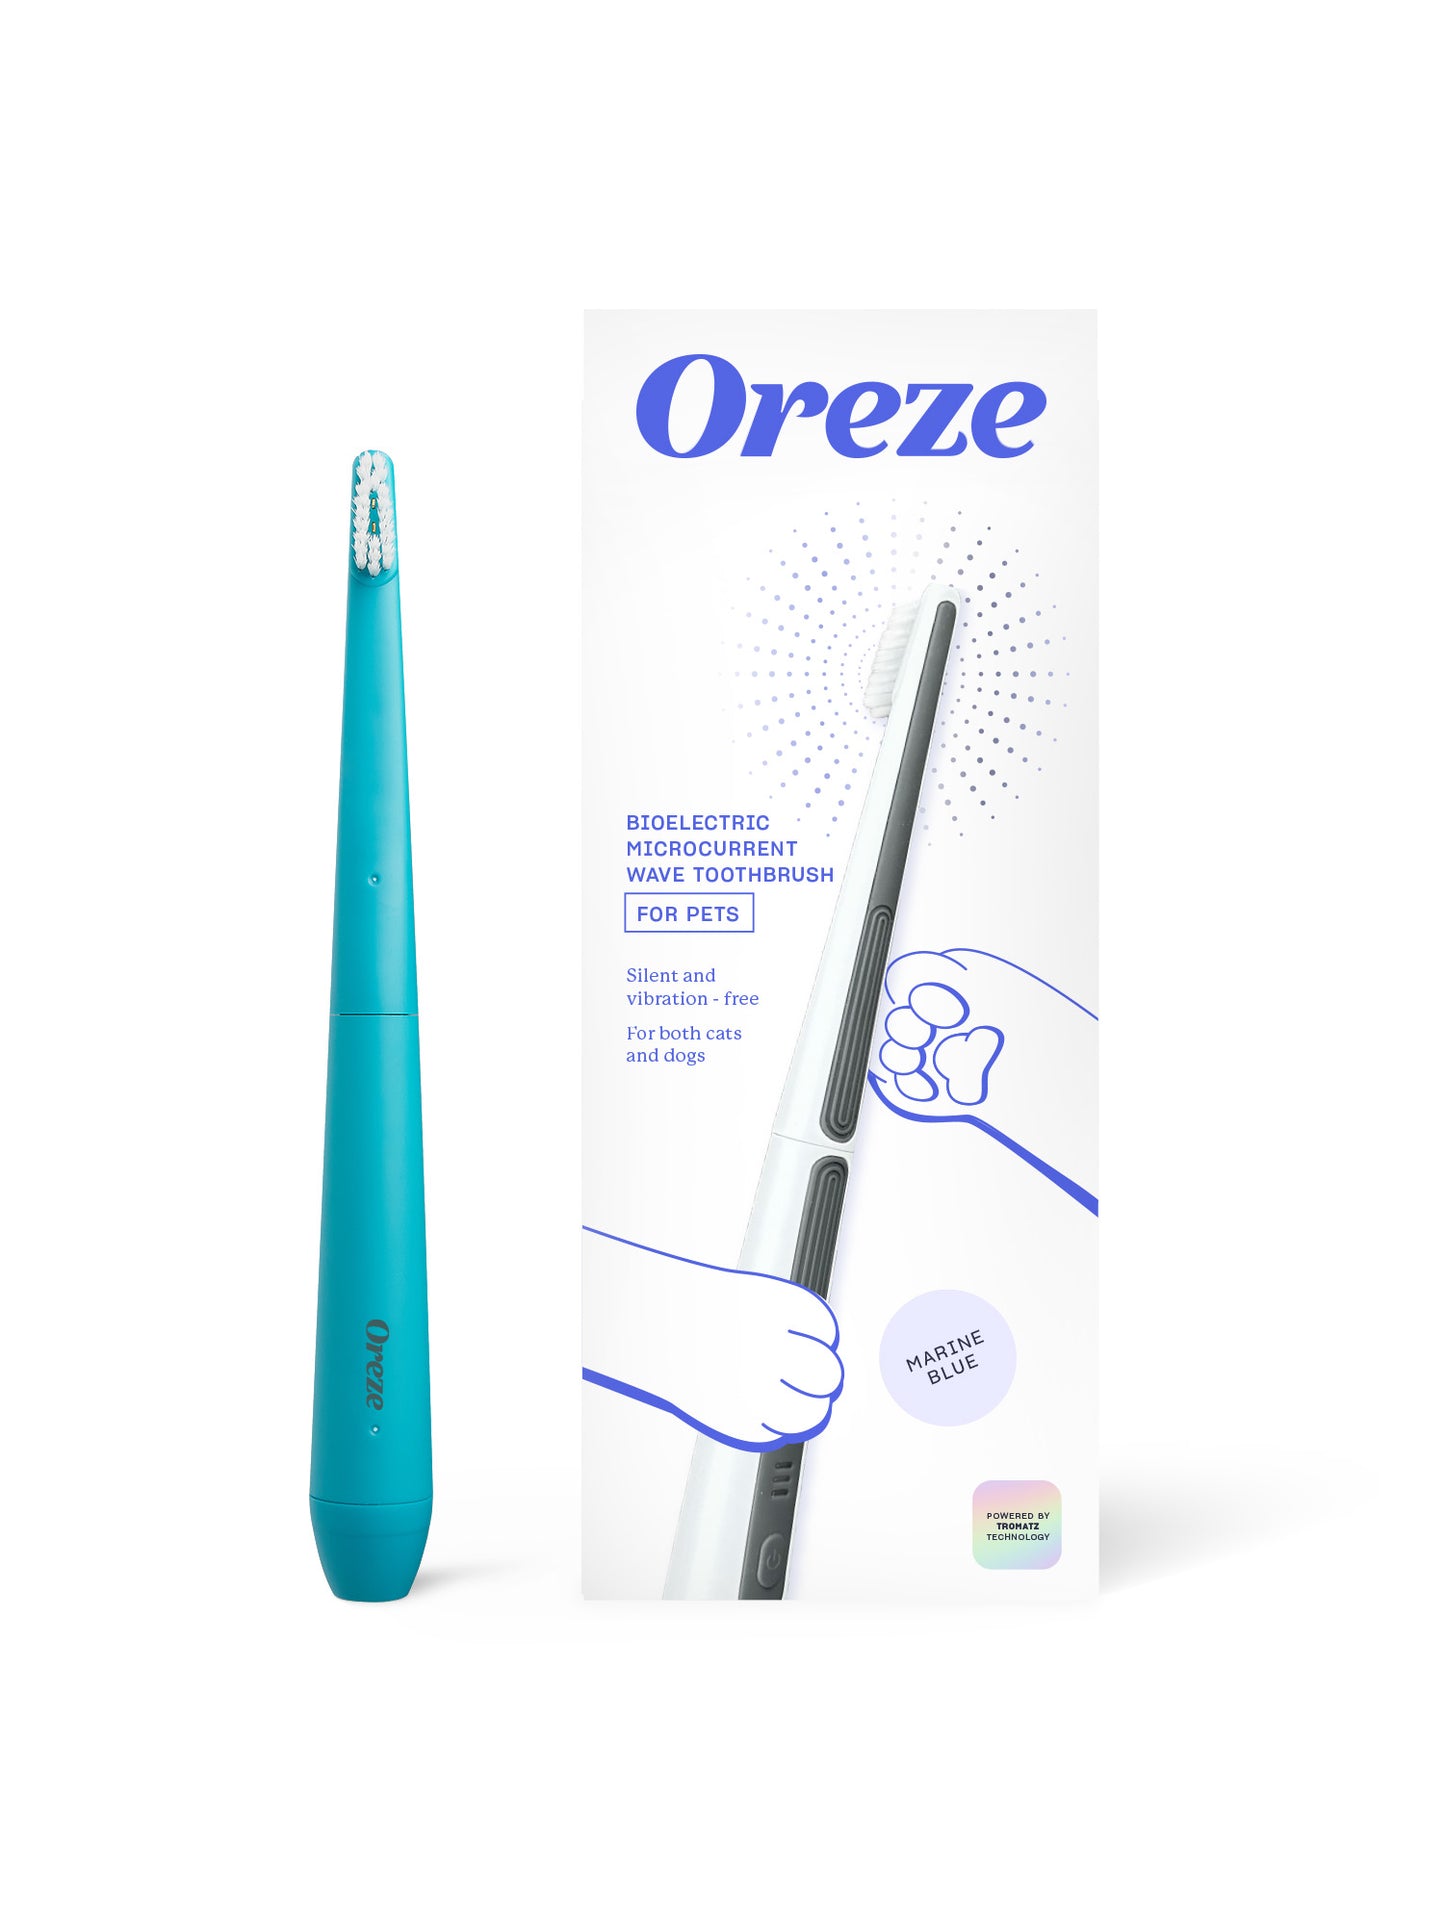 Oreze pet toothbrush in marine blue